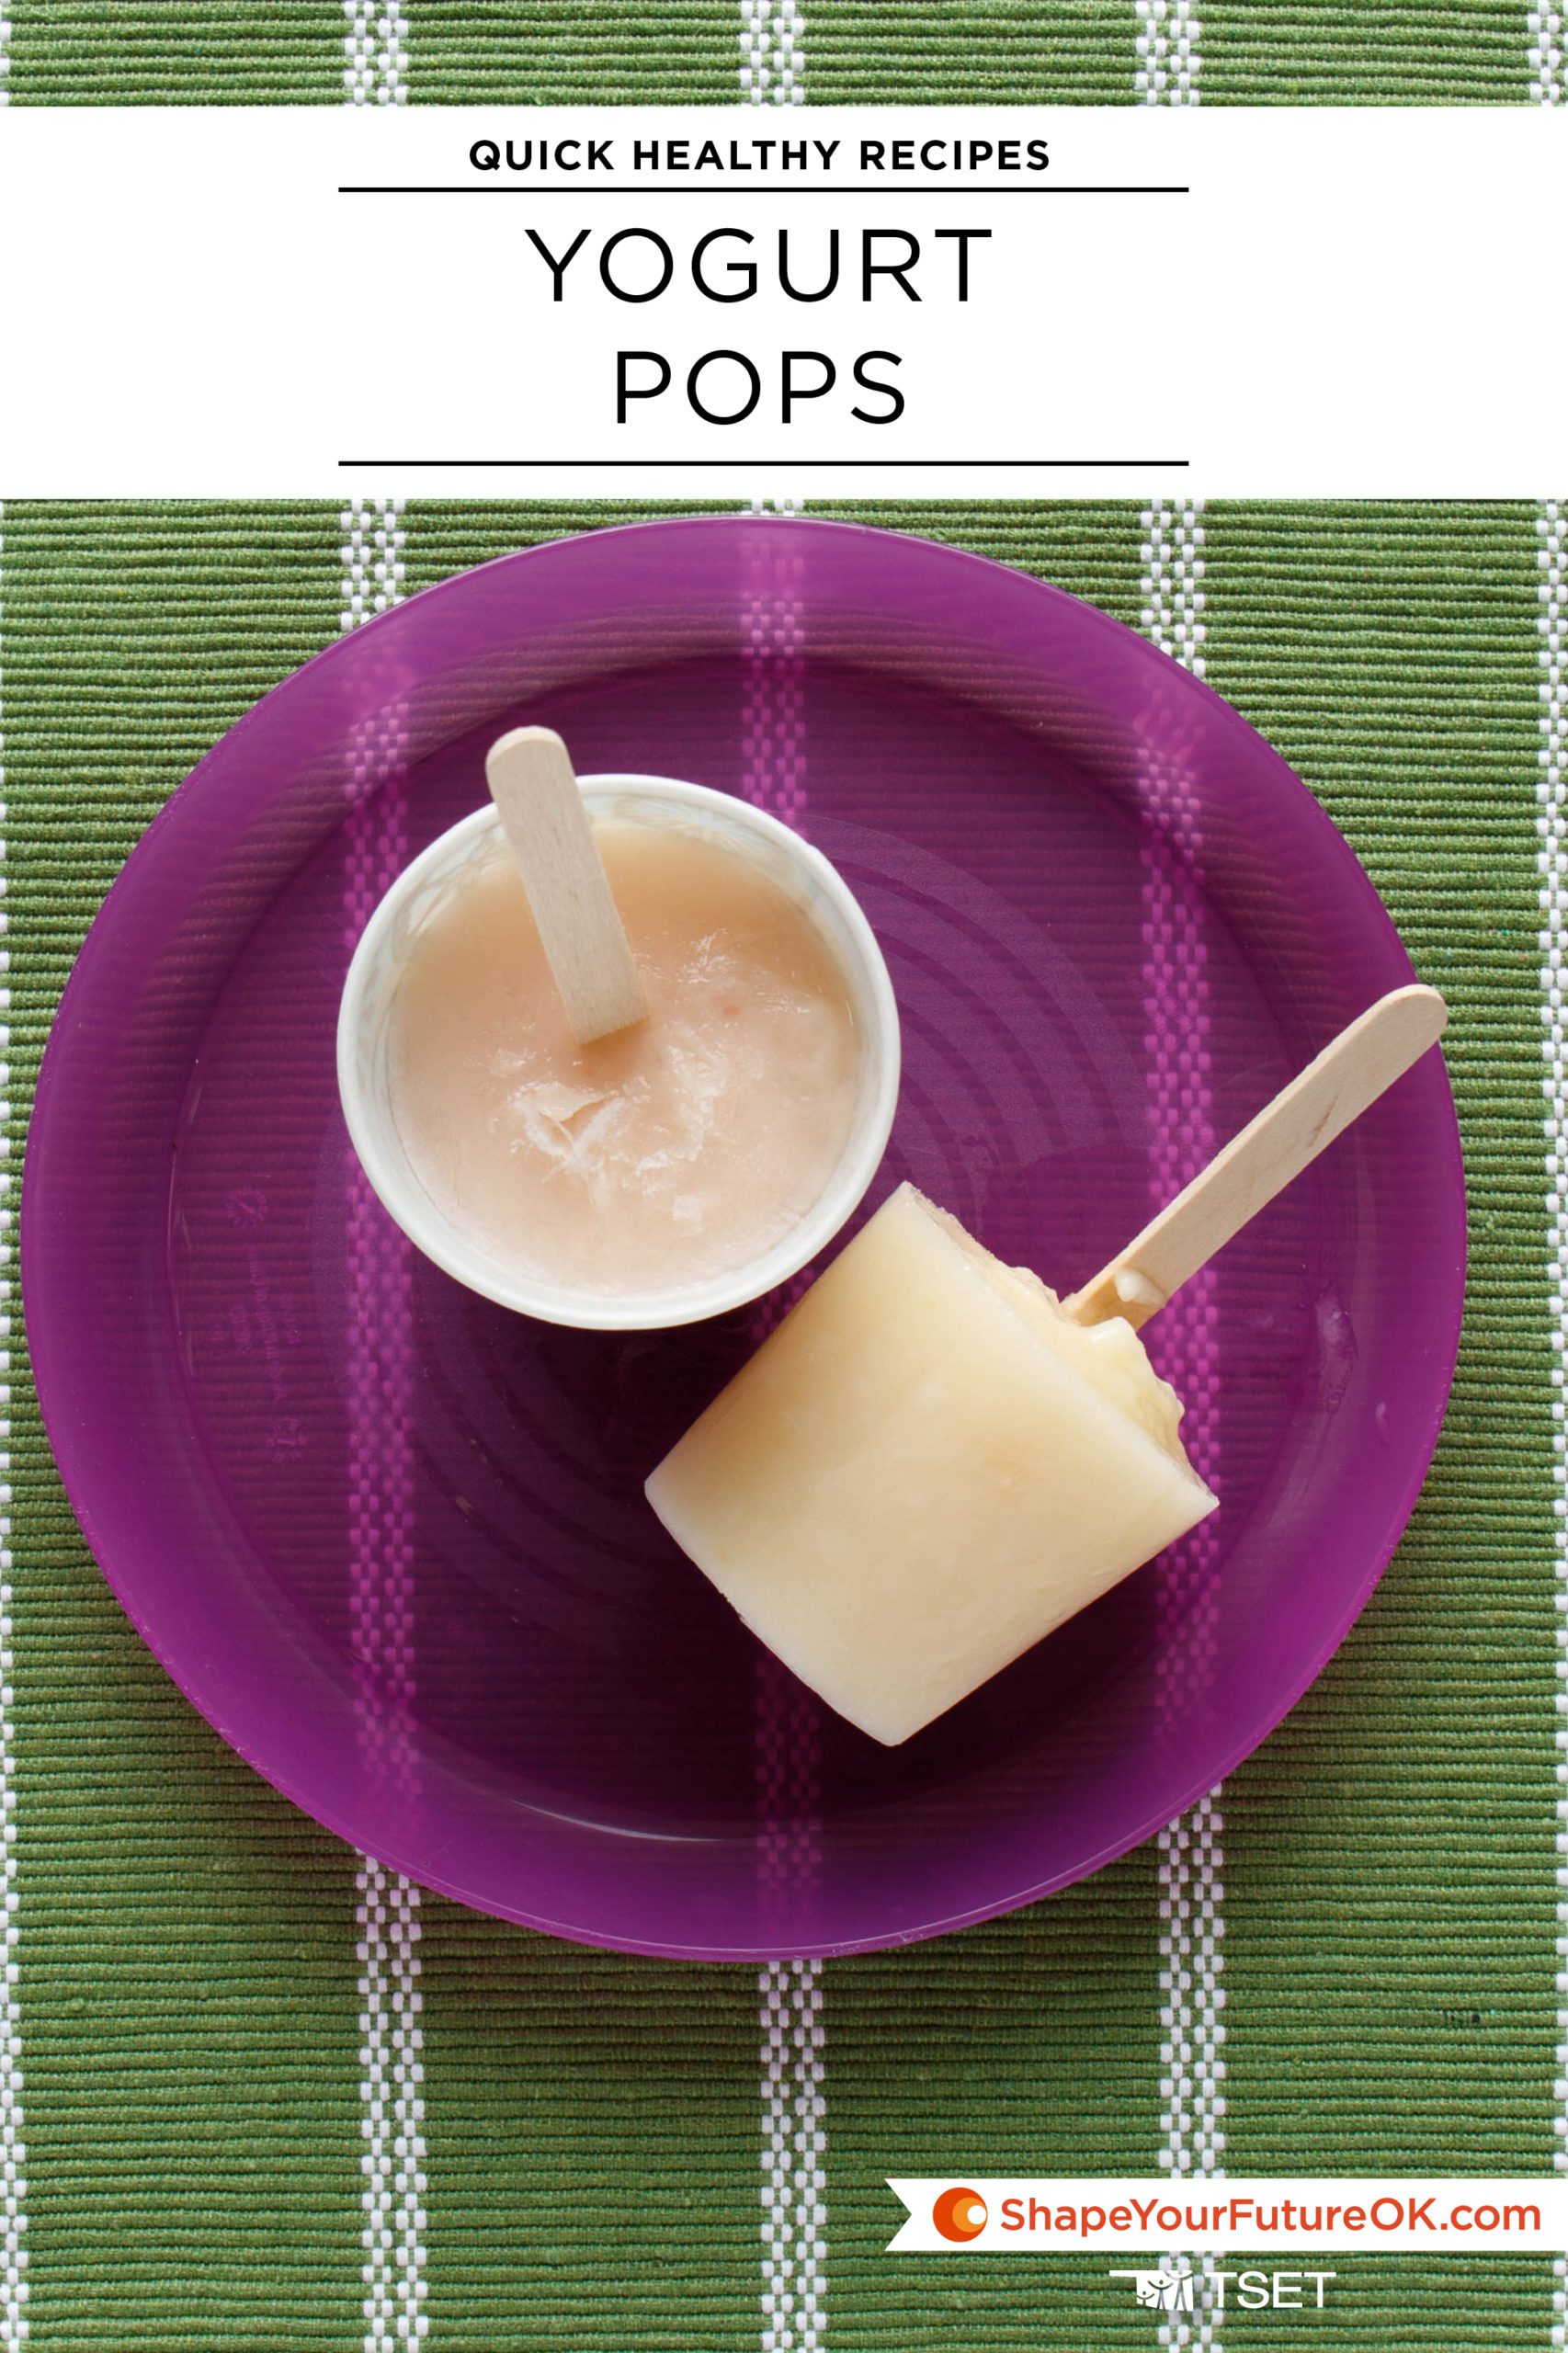 Yogurt pops